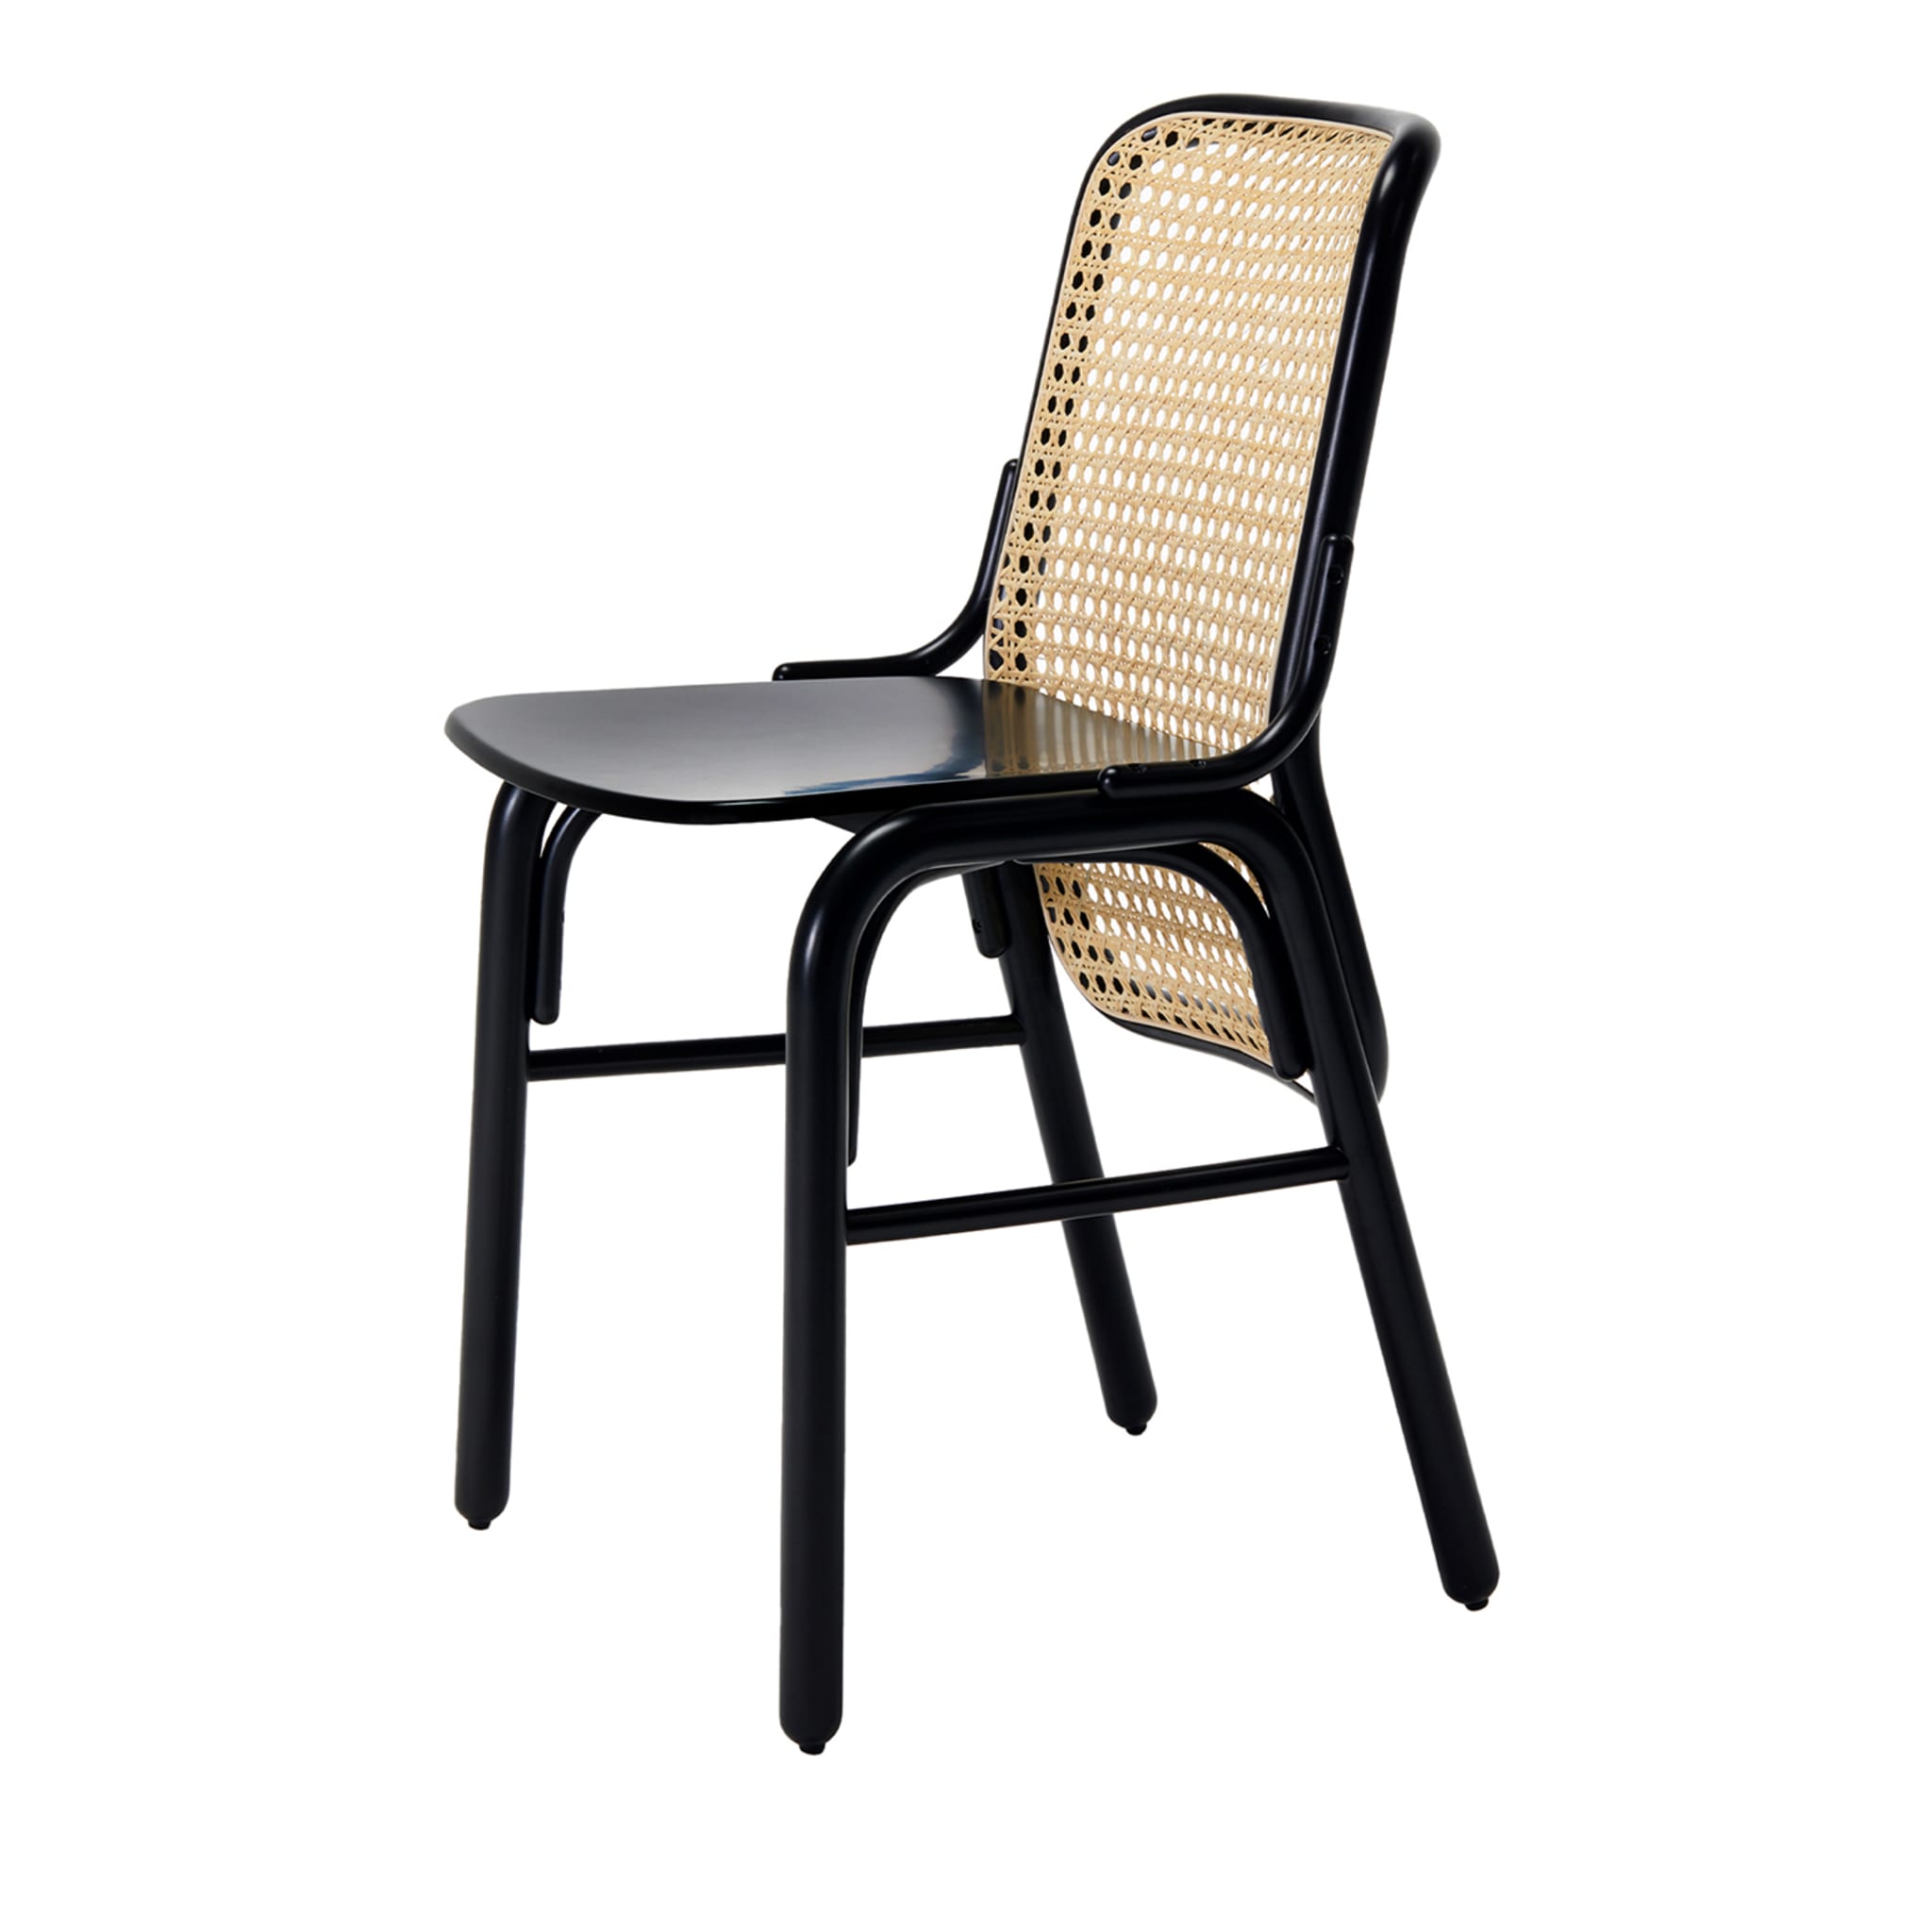 Frantz 885 Black Chair #1 by Gil Sheffi & Yoav Avinoam - Main view